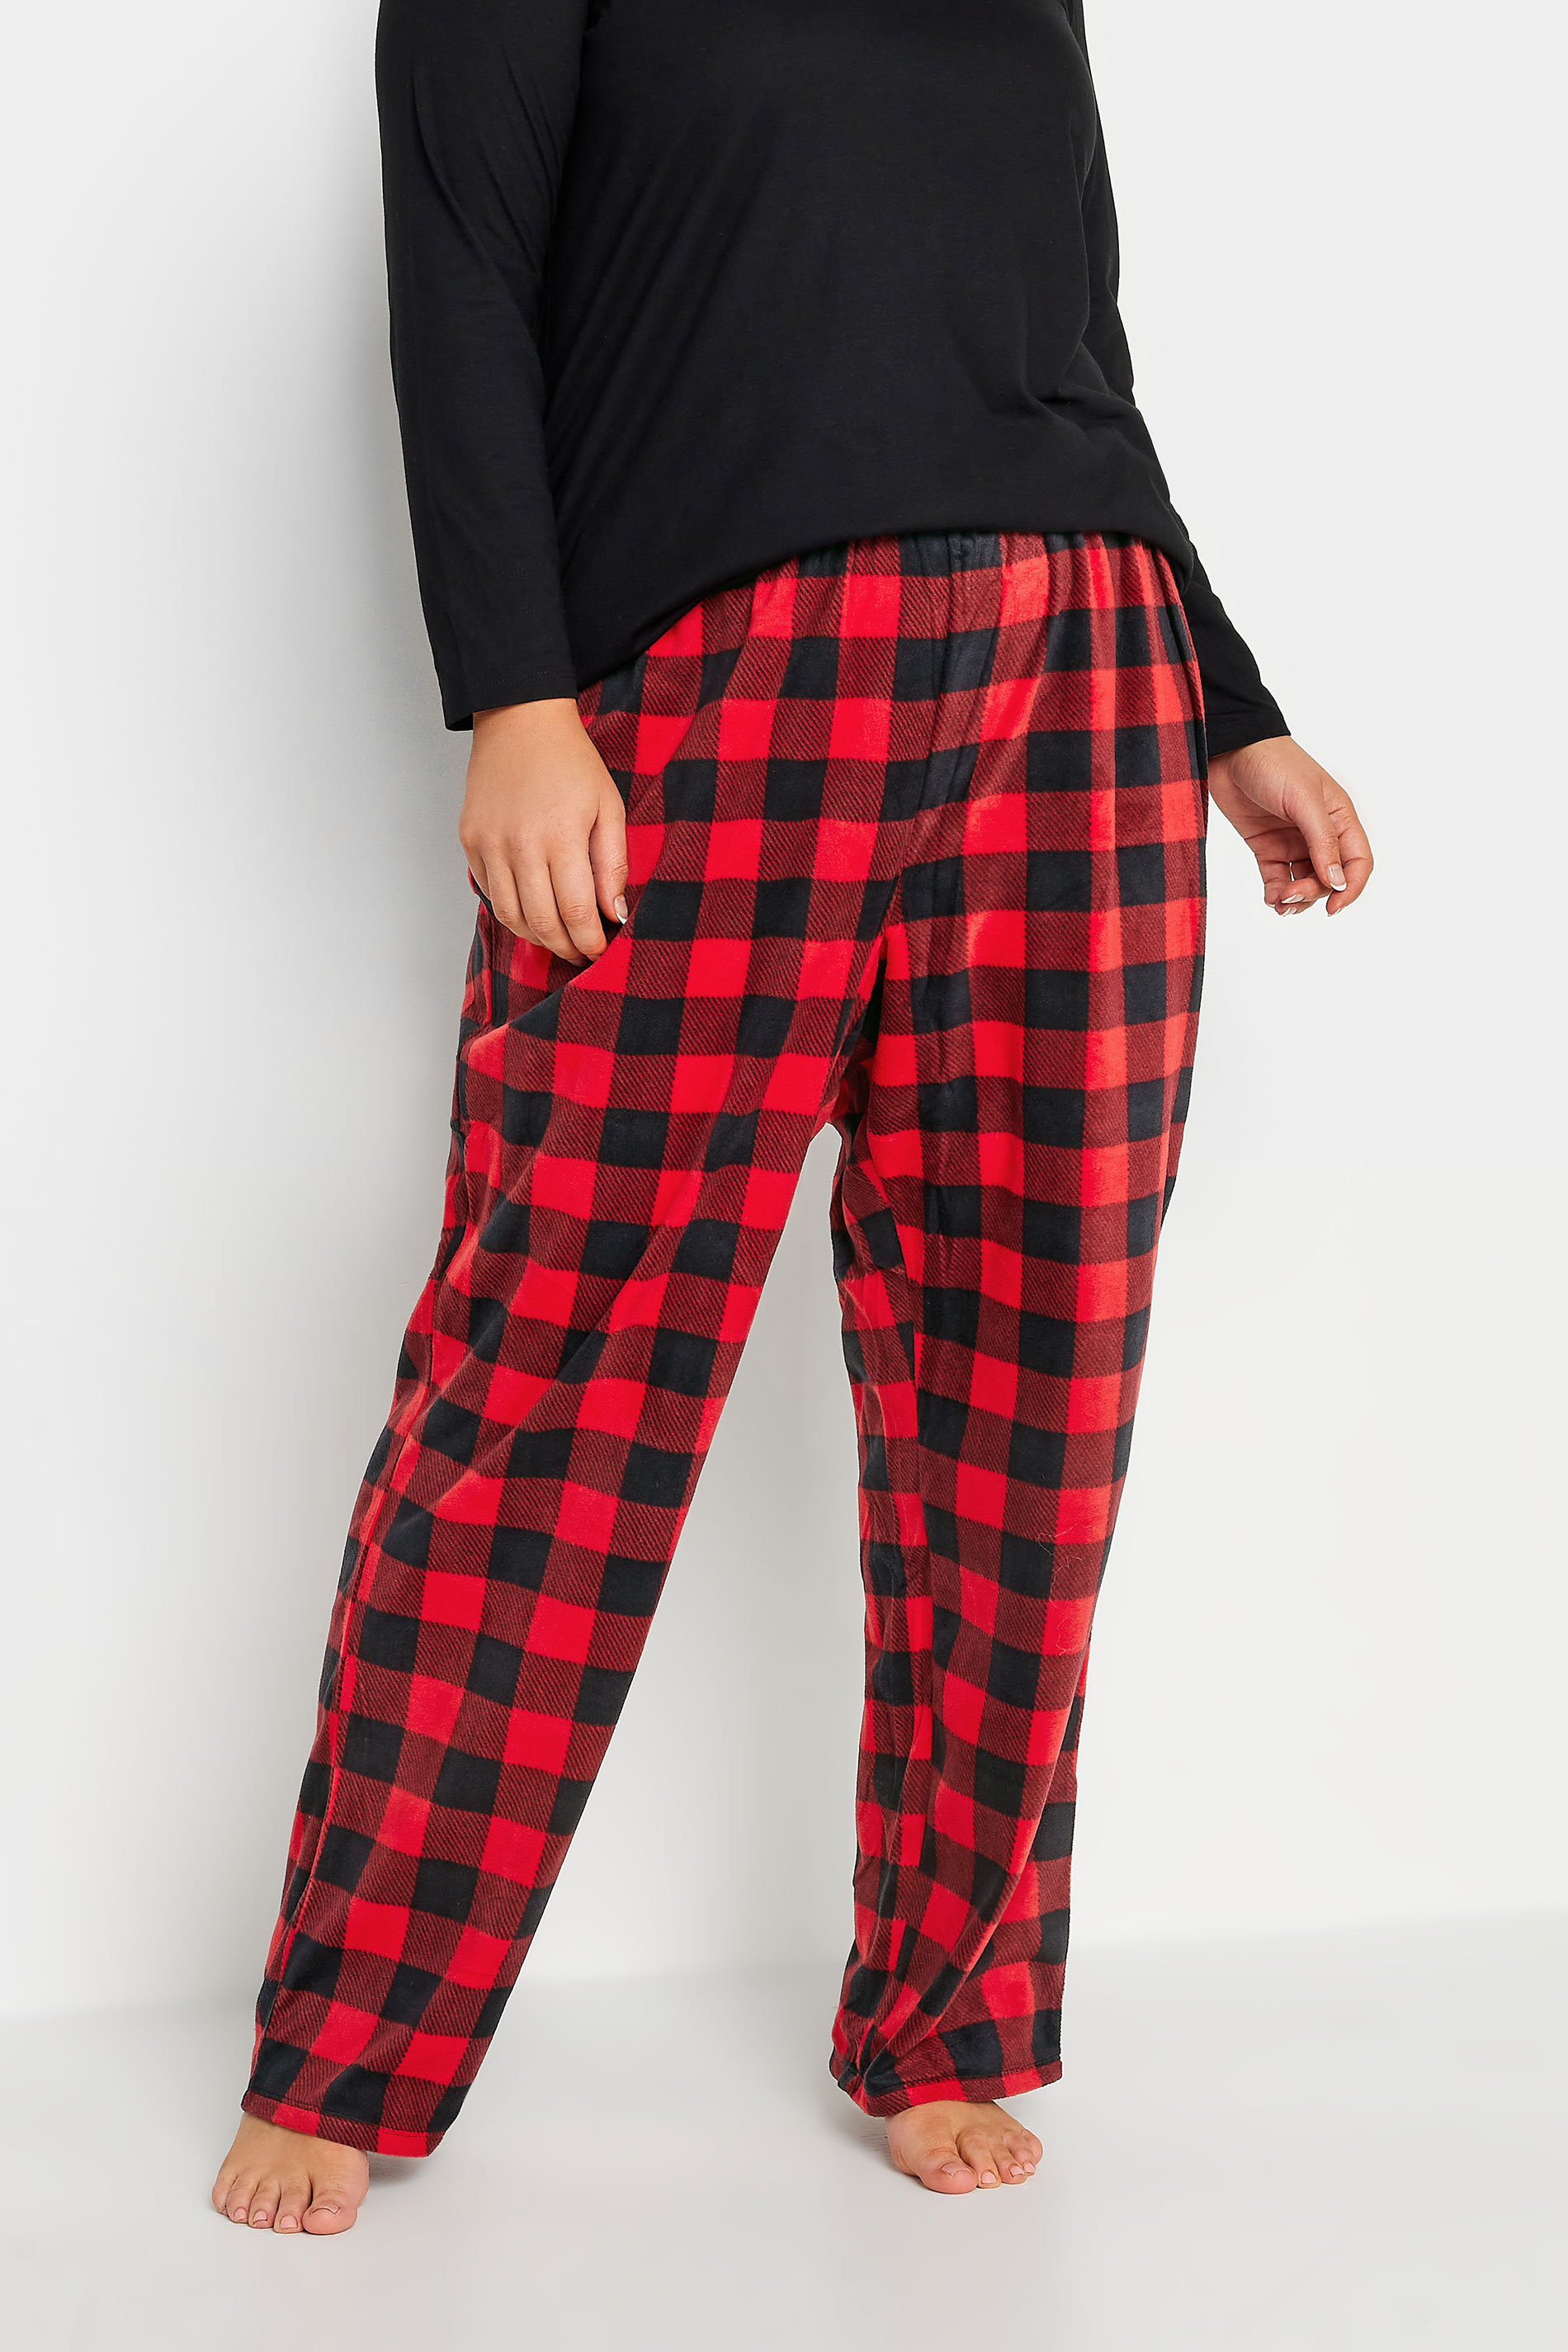 Stretch knit jogger pyjama pants - Buffalo red plaid - Plus Size